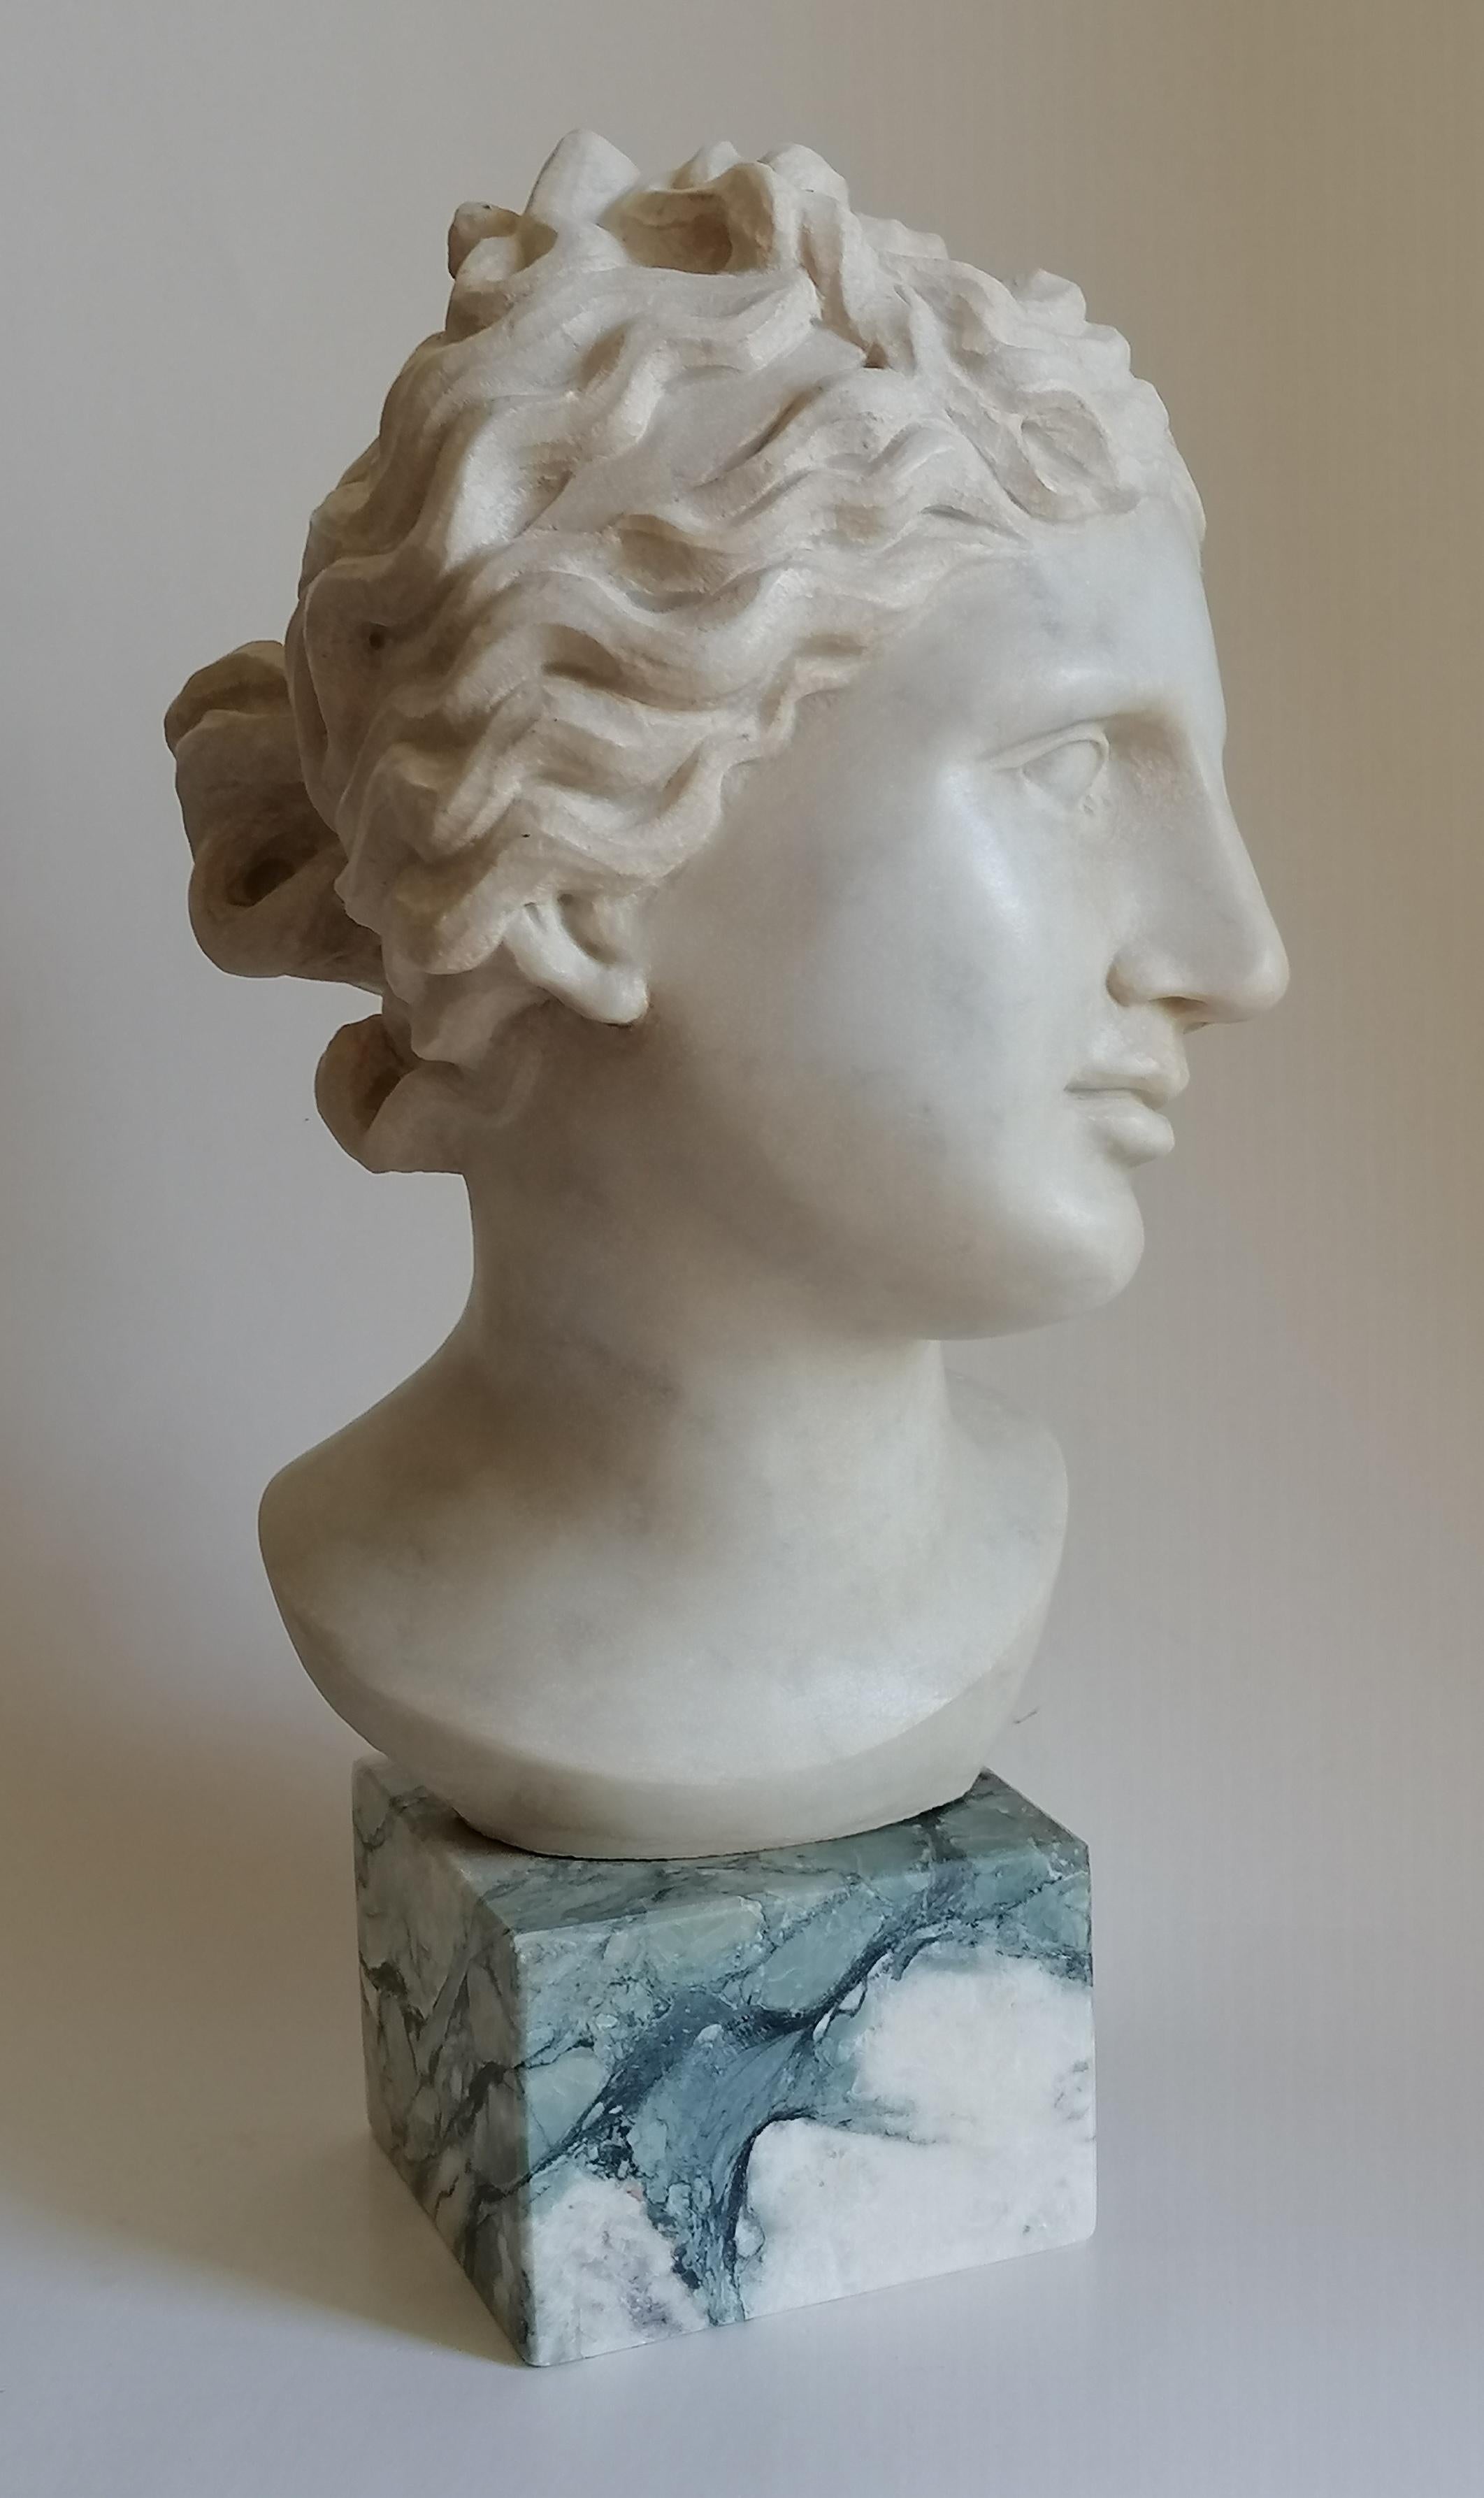 Carrara Marble Venere Medici -testa scolpita su marmo bianco di Carrara -made in Italy For Sale